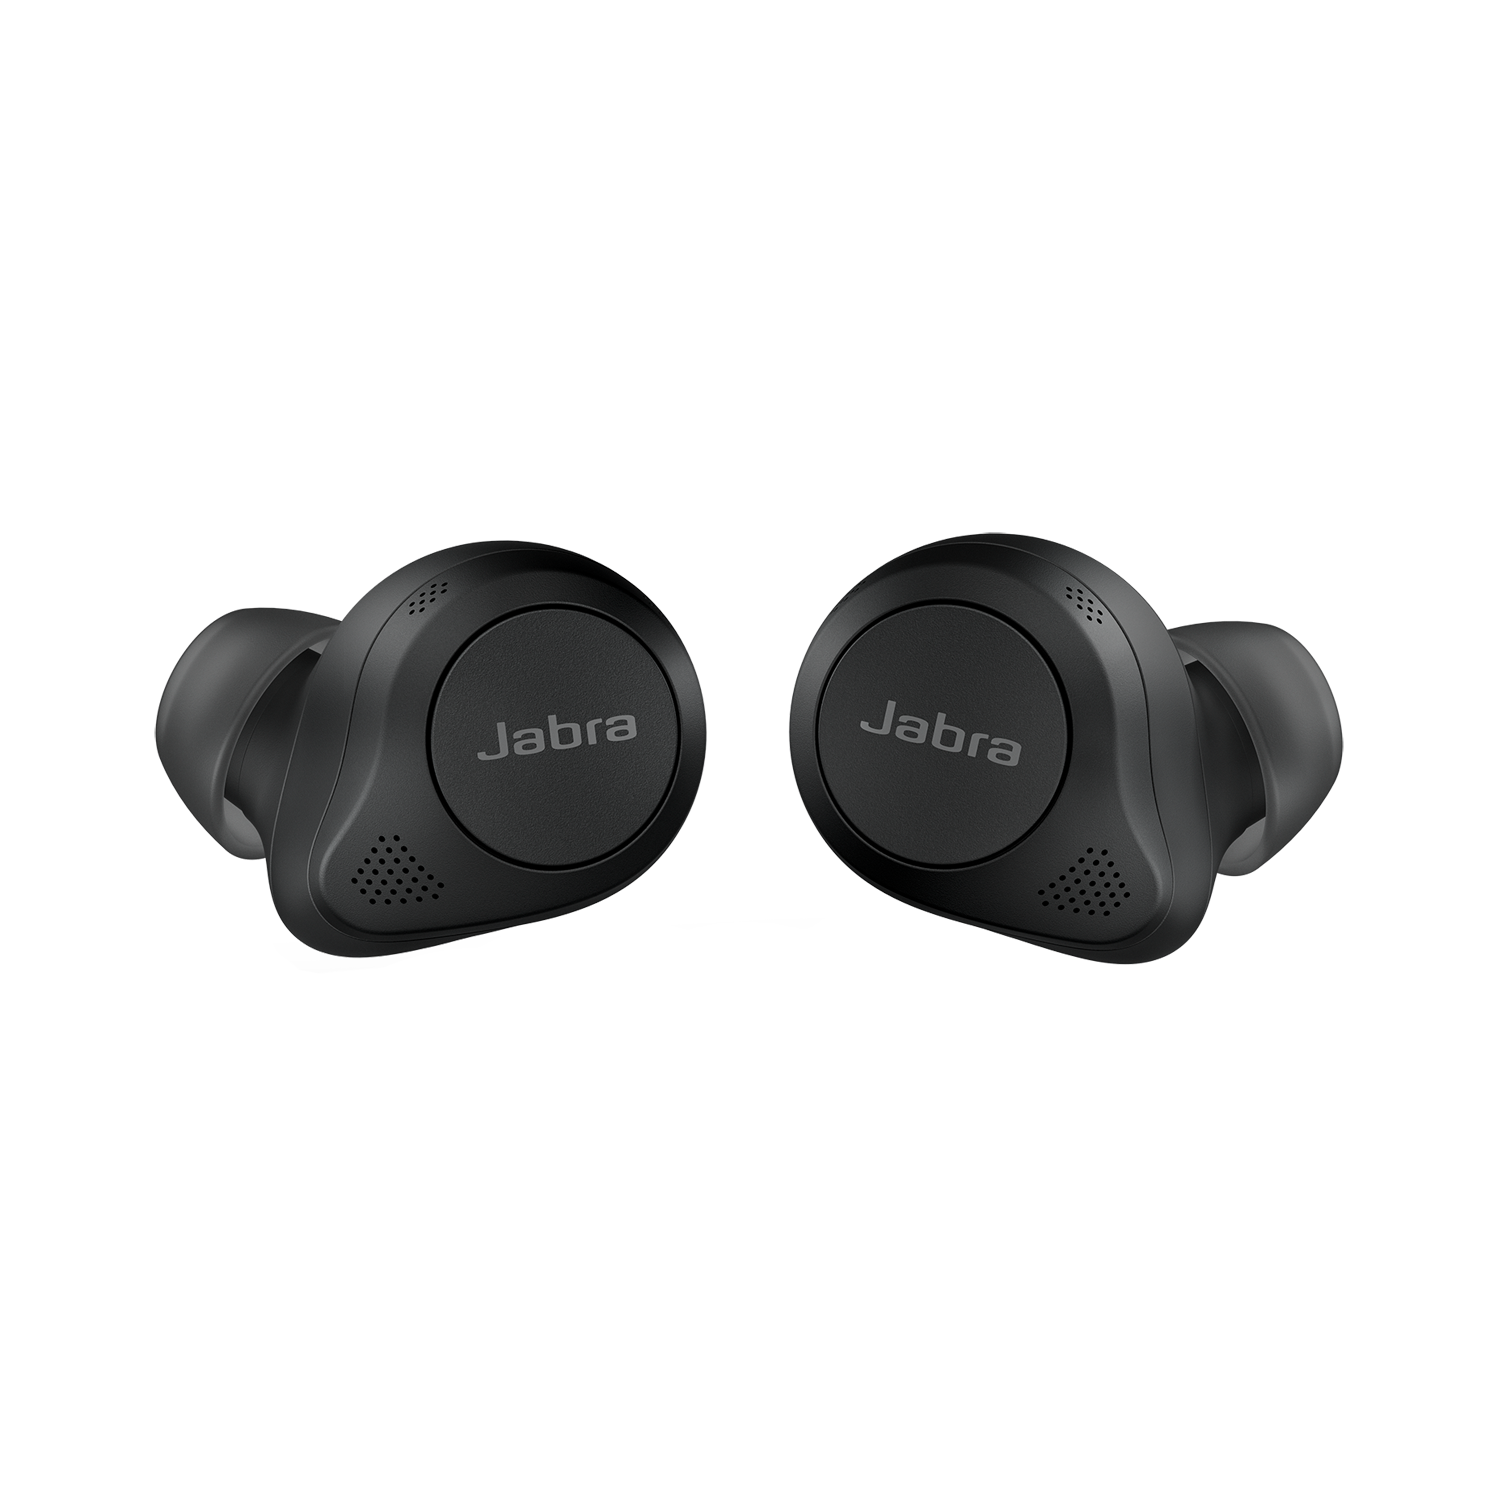 Jabra Elite 85t Replacement Earbuds - Black